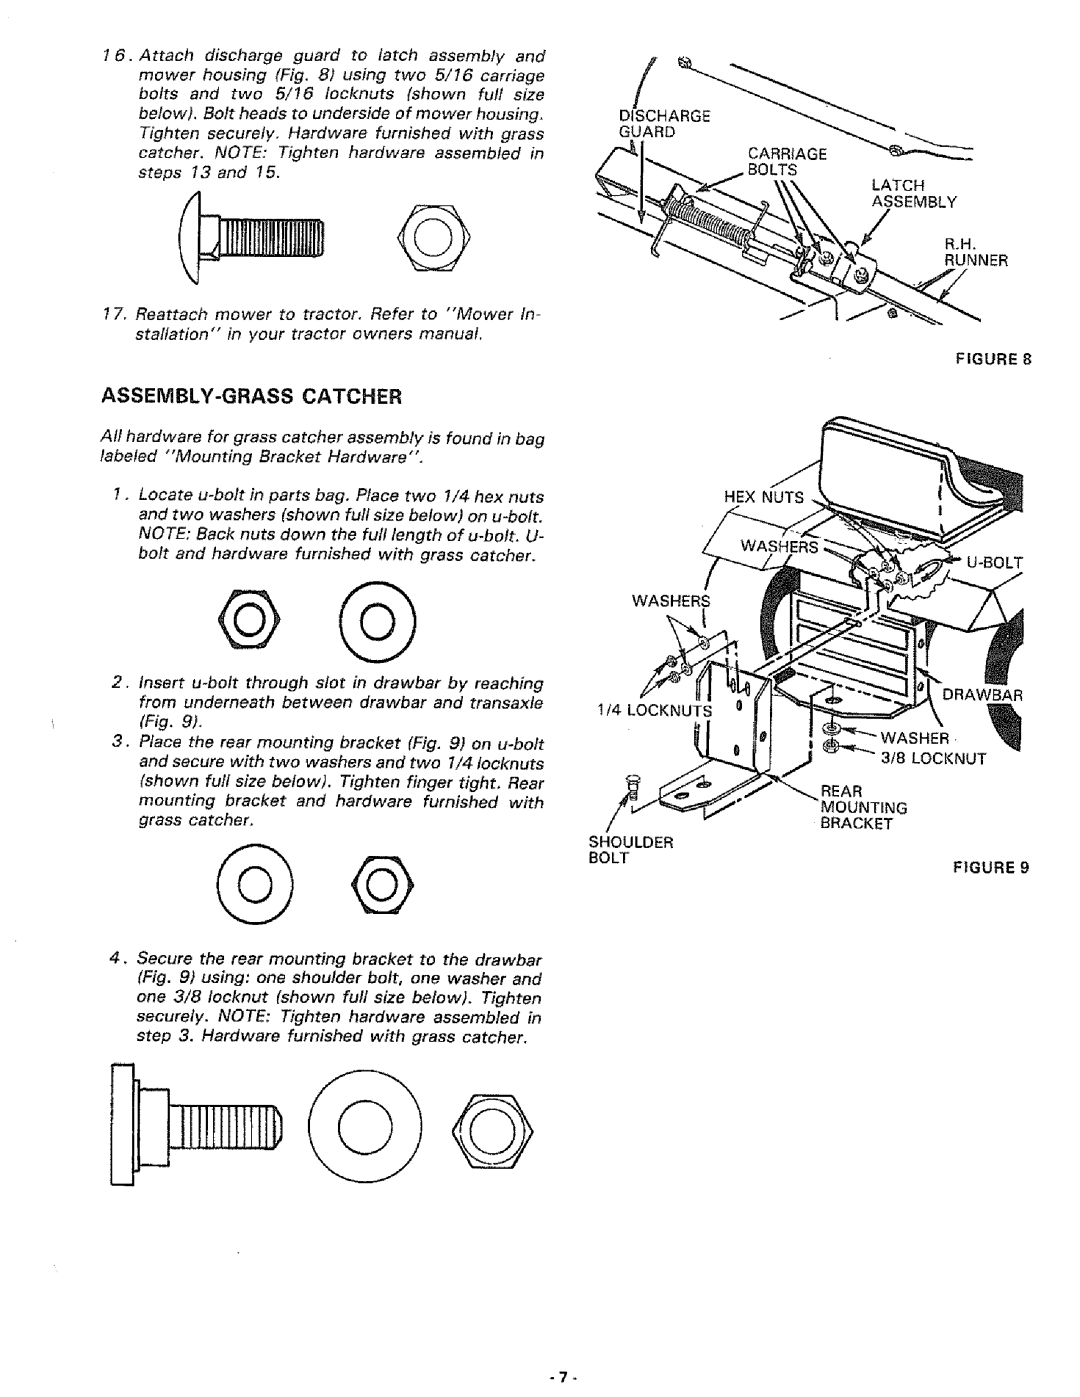 Sears 917.249391 manual Assembly-Grasscatcher, Runner, Hex Nuts U-Bo Lt Washers, 1/4 LOCKNUTS, Shoulder Bolt 